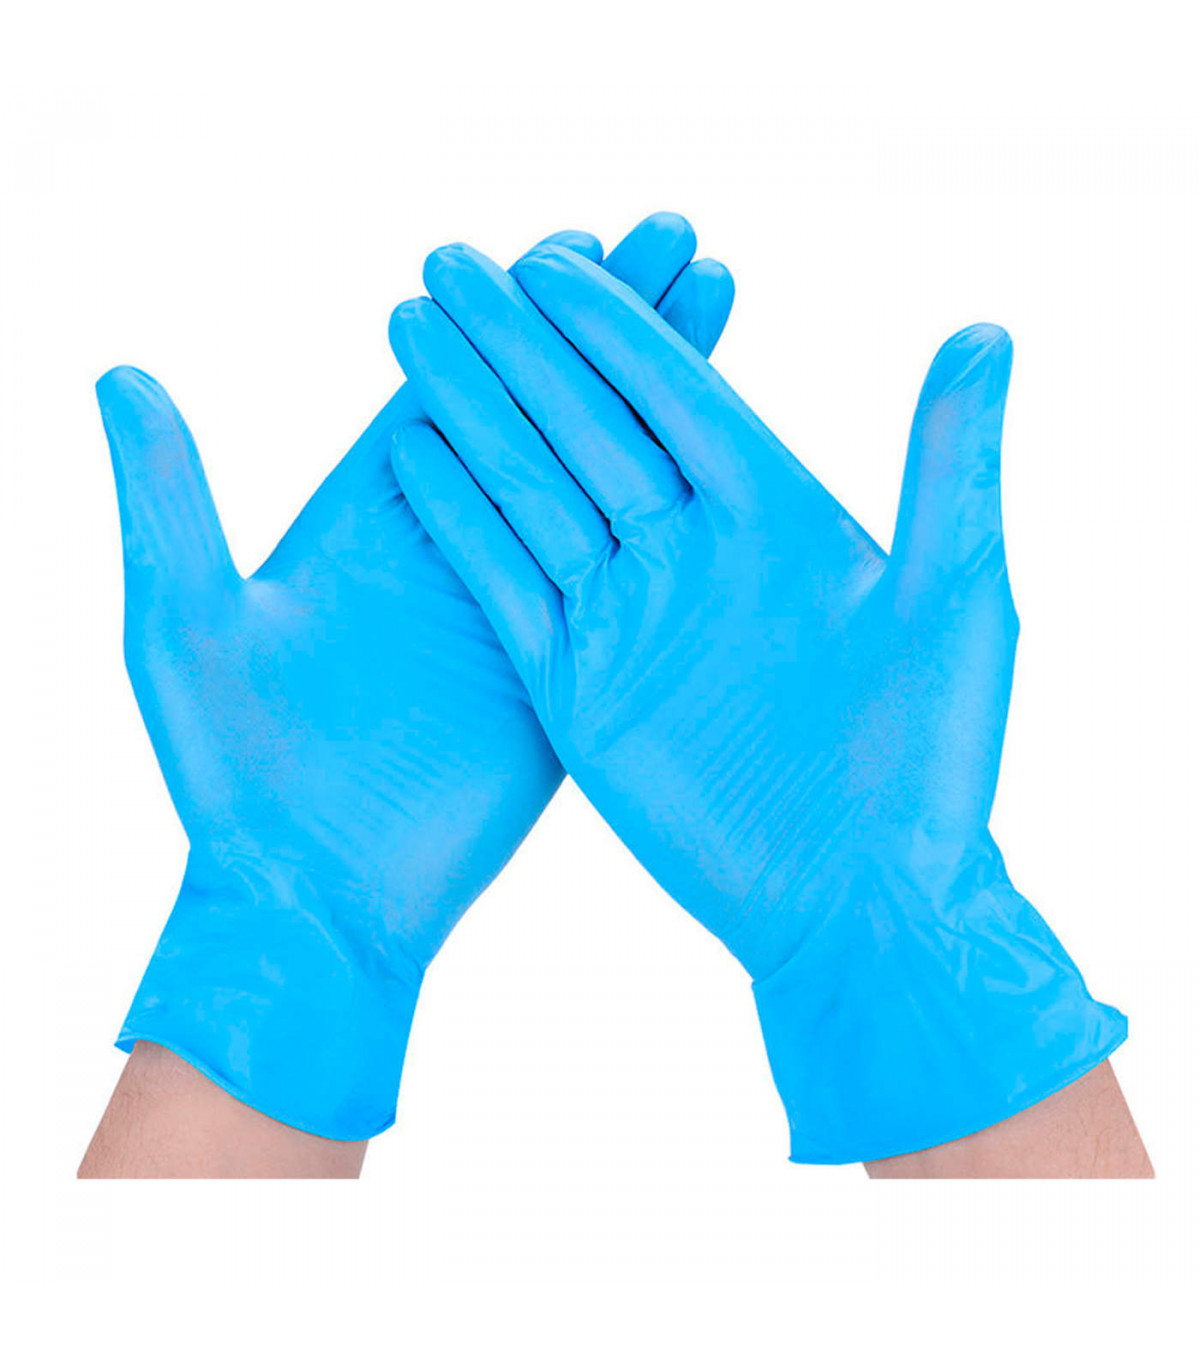 Guantes de nitrilo grandes de 100 unidades, guantes de examen desechables,  azules, sin polvo/látex, no estériles, de 4 milímetros ligeramente